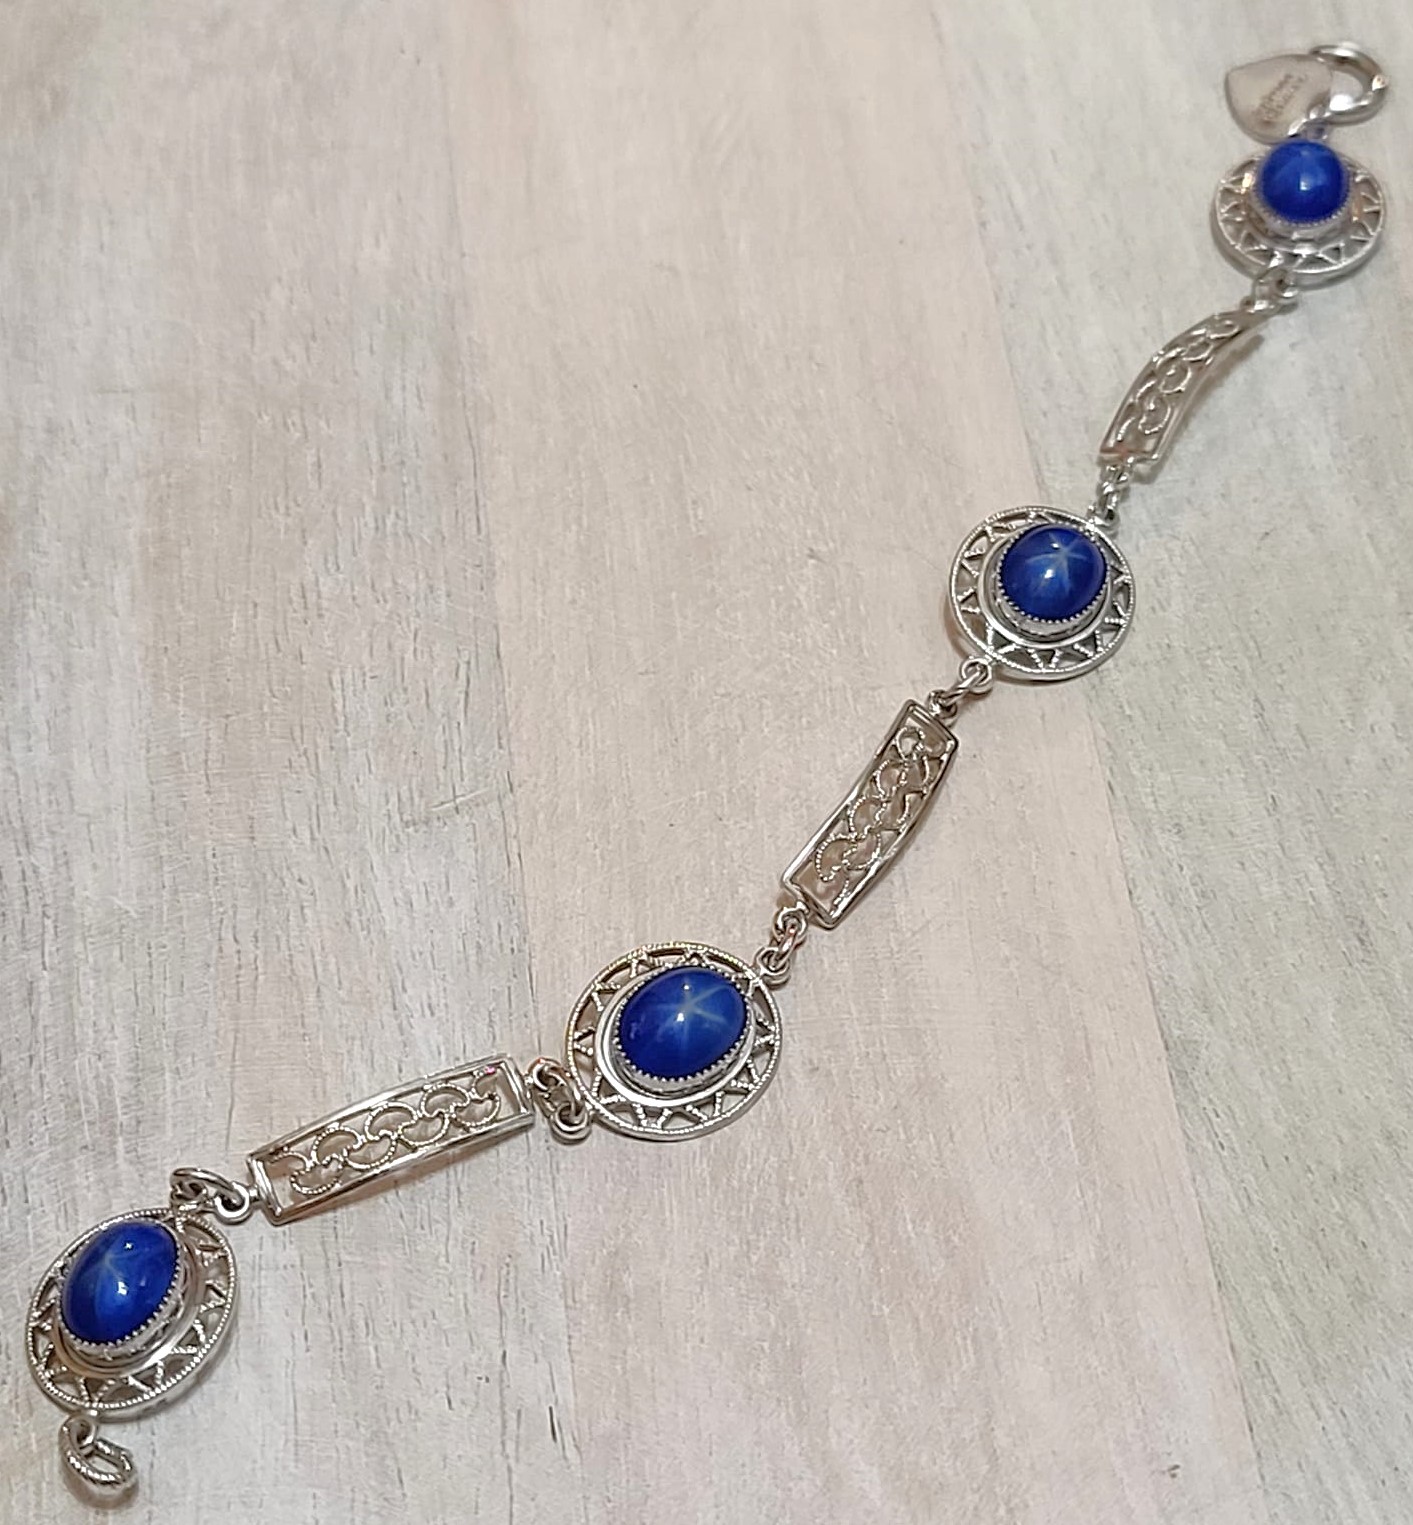 14KT GF bracelet, white gold filled GF with blue stone cabachons, filigree detail, vintage bracelet with heart charm